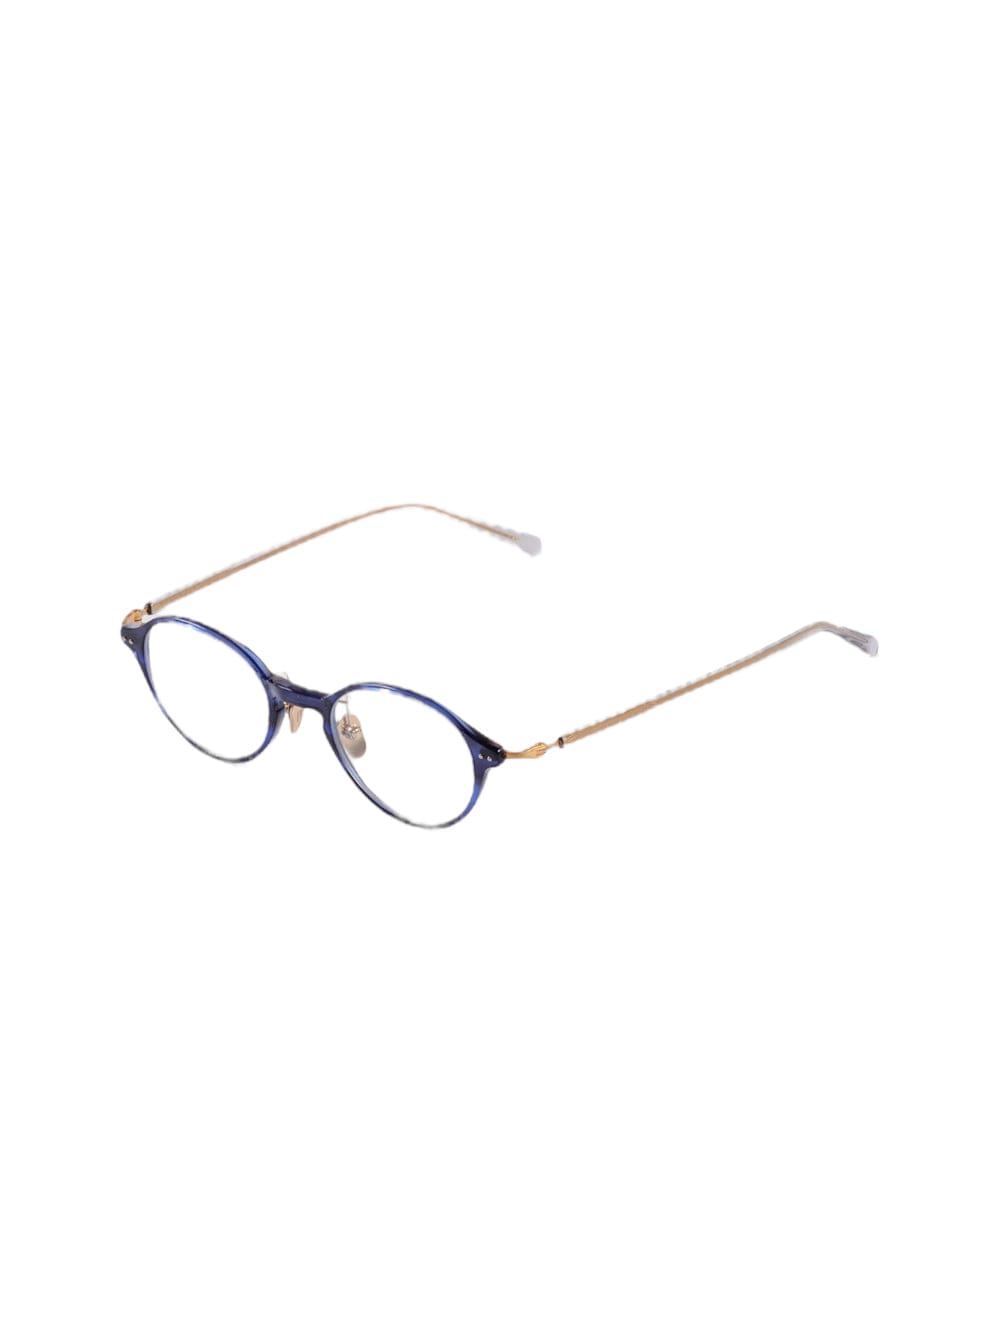 Gms 830 - Blue Navy Glasses